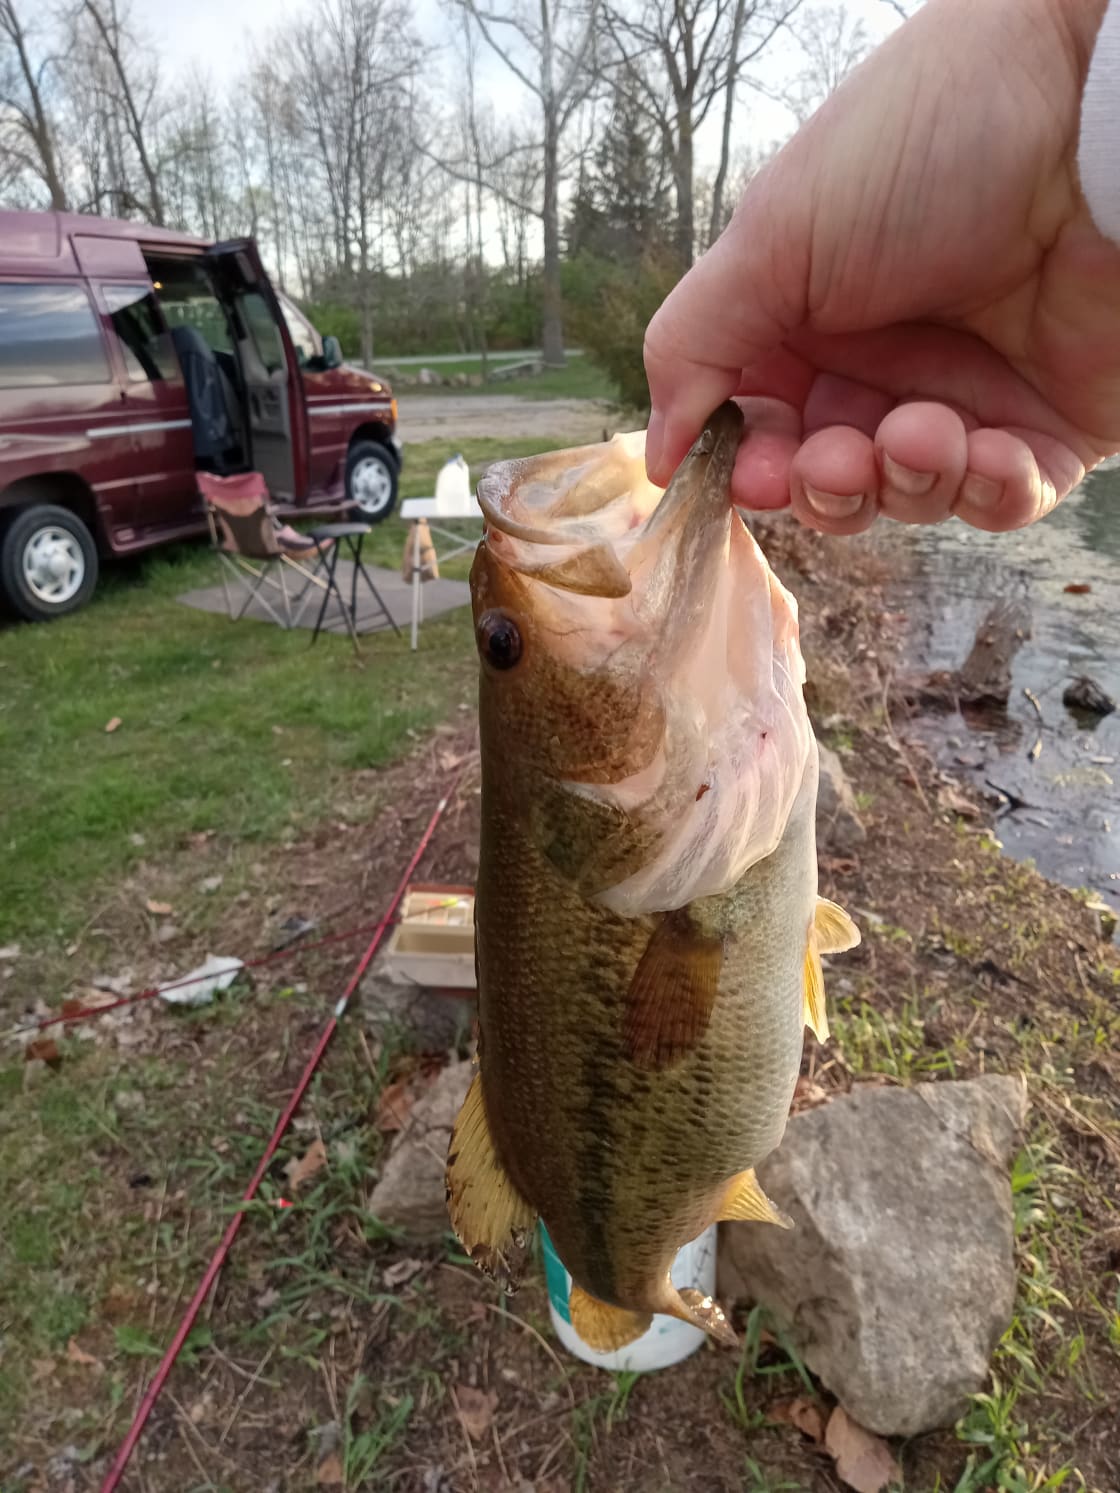 The lake had good fishing. 